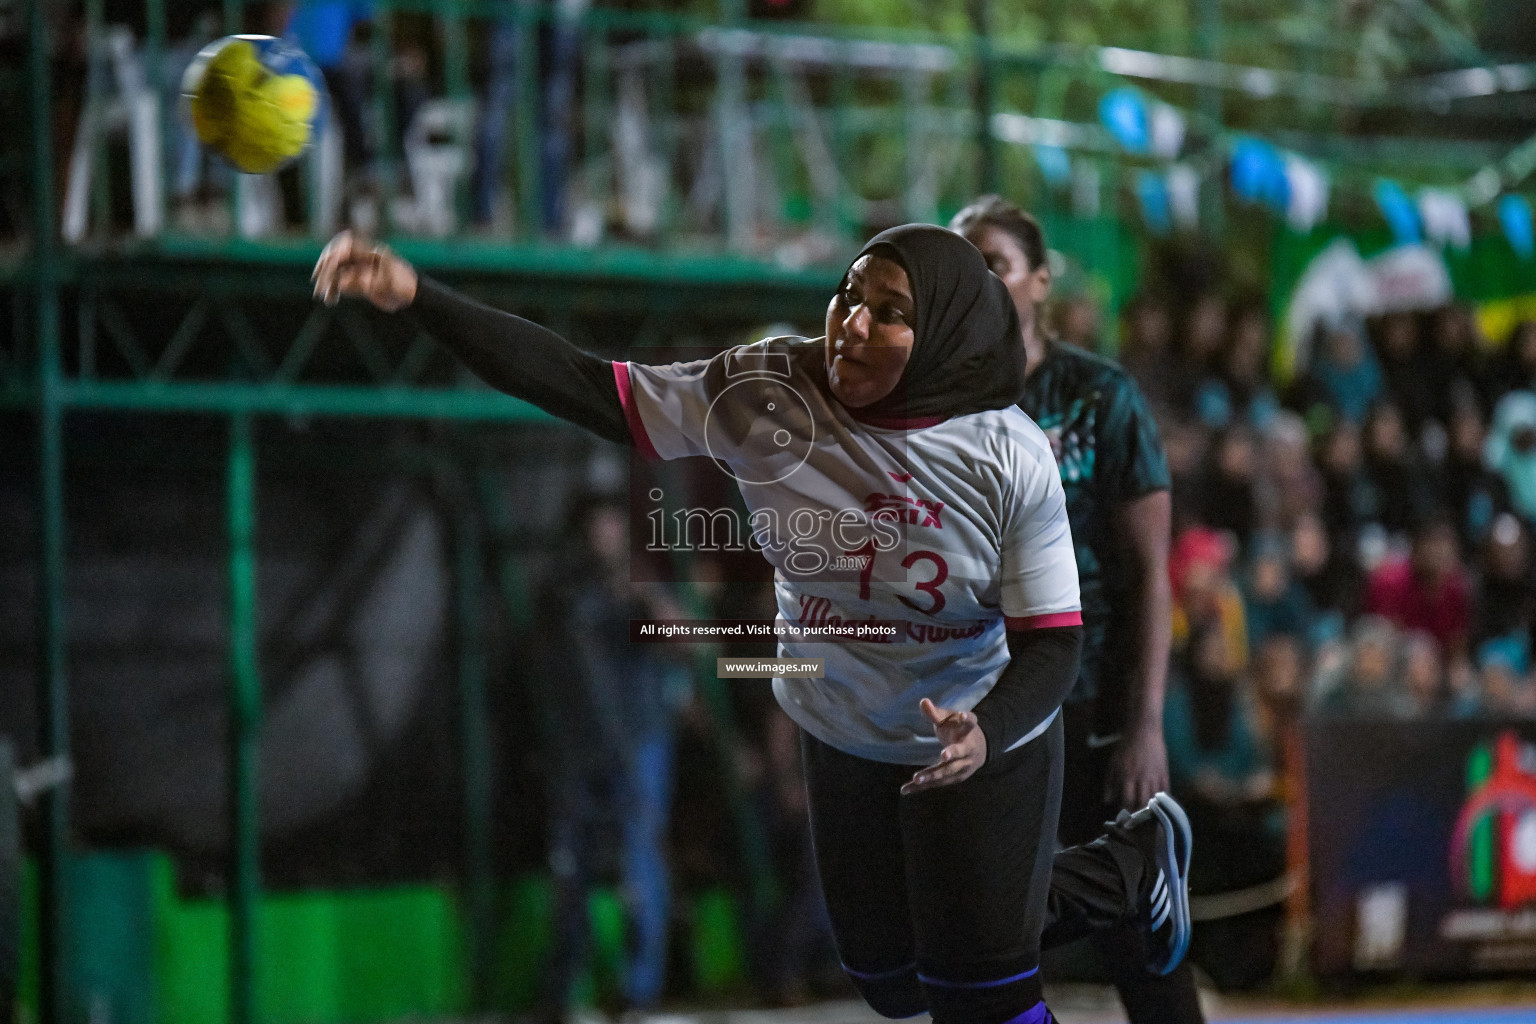 Finals of Milo 9th National Handball Tournament 2022 held in National Handball Grounds, Male', Maldives on 15 November 2022 Photos: Nausham Waheed / images.mv